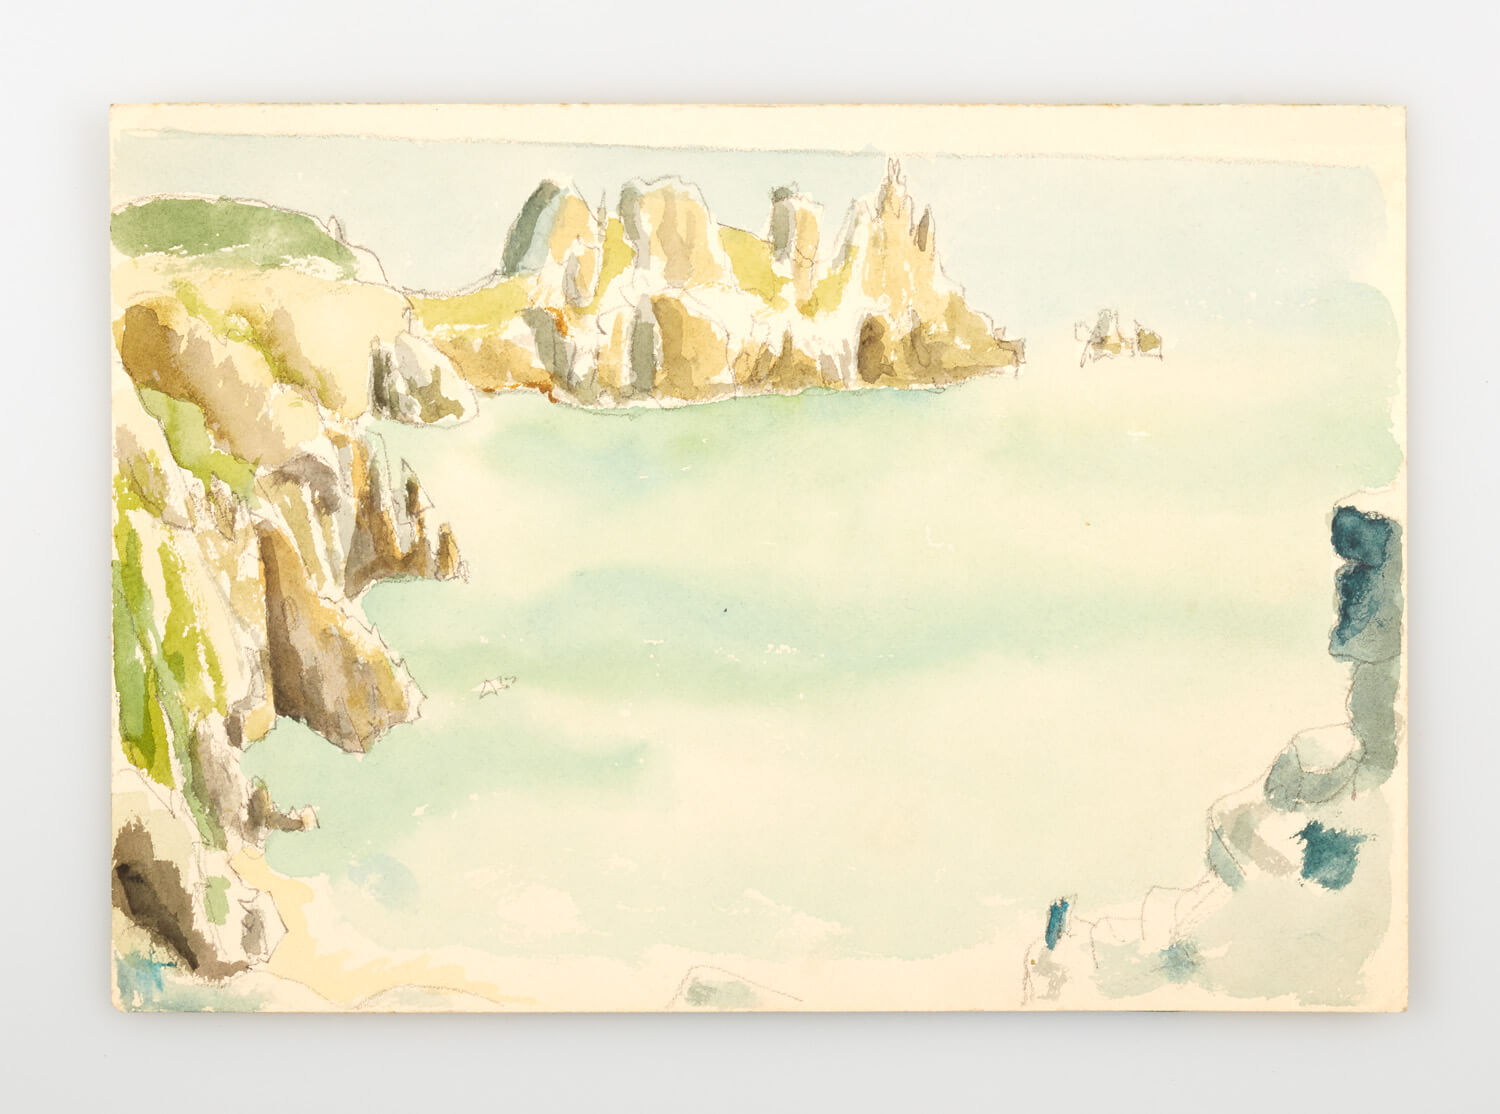 JB257 - Rock and sea, Cornwall sketch - 1946 - 18 x 25.5 cm - Watercolour